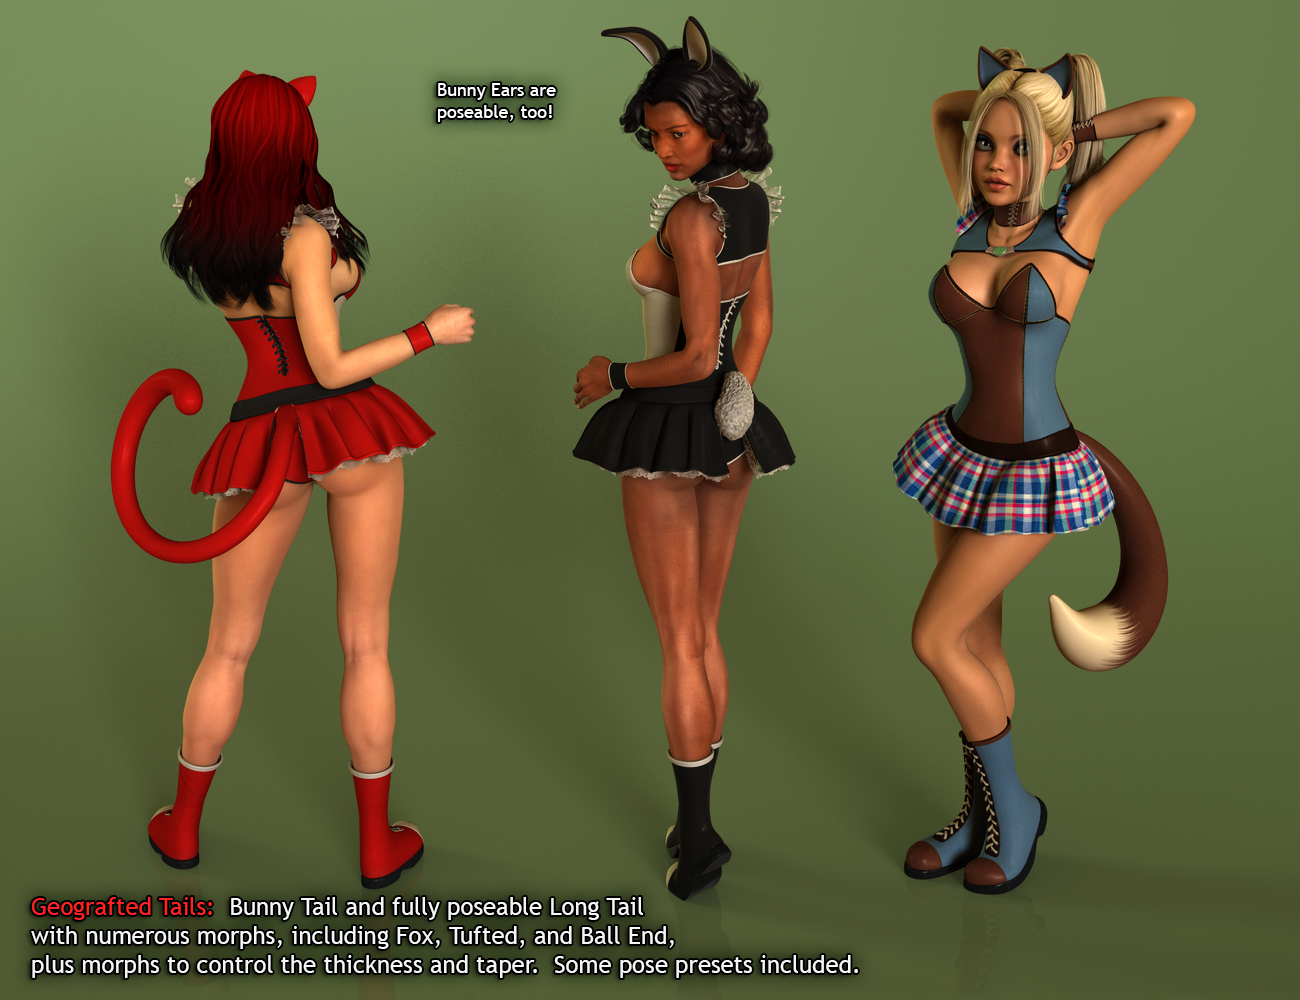 Kibri Dress for Genesis 2 Female(s) by: SloshWerks, 3D Models by Daz 3D